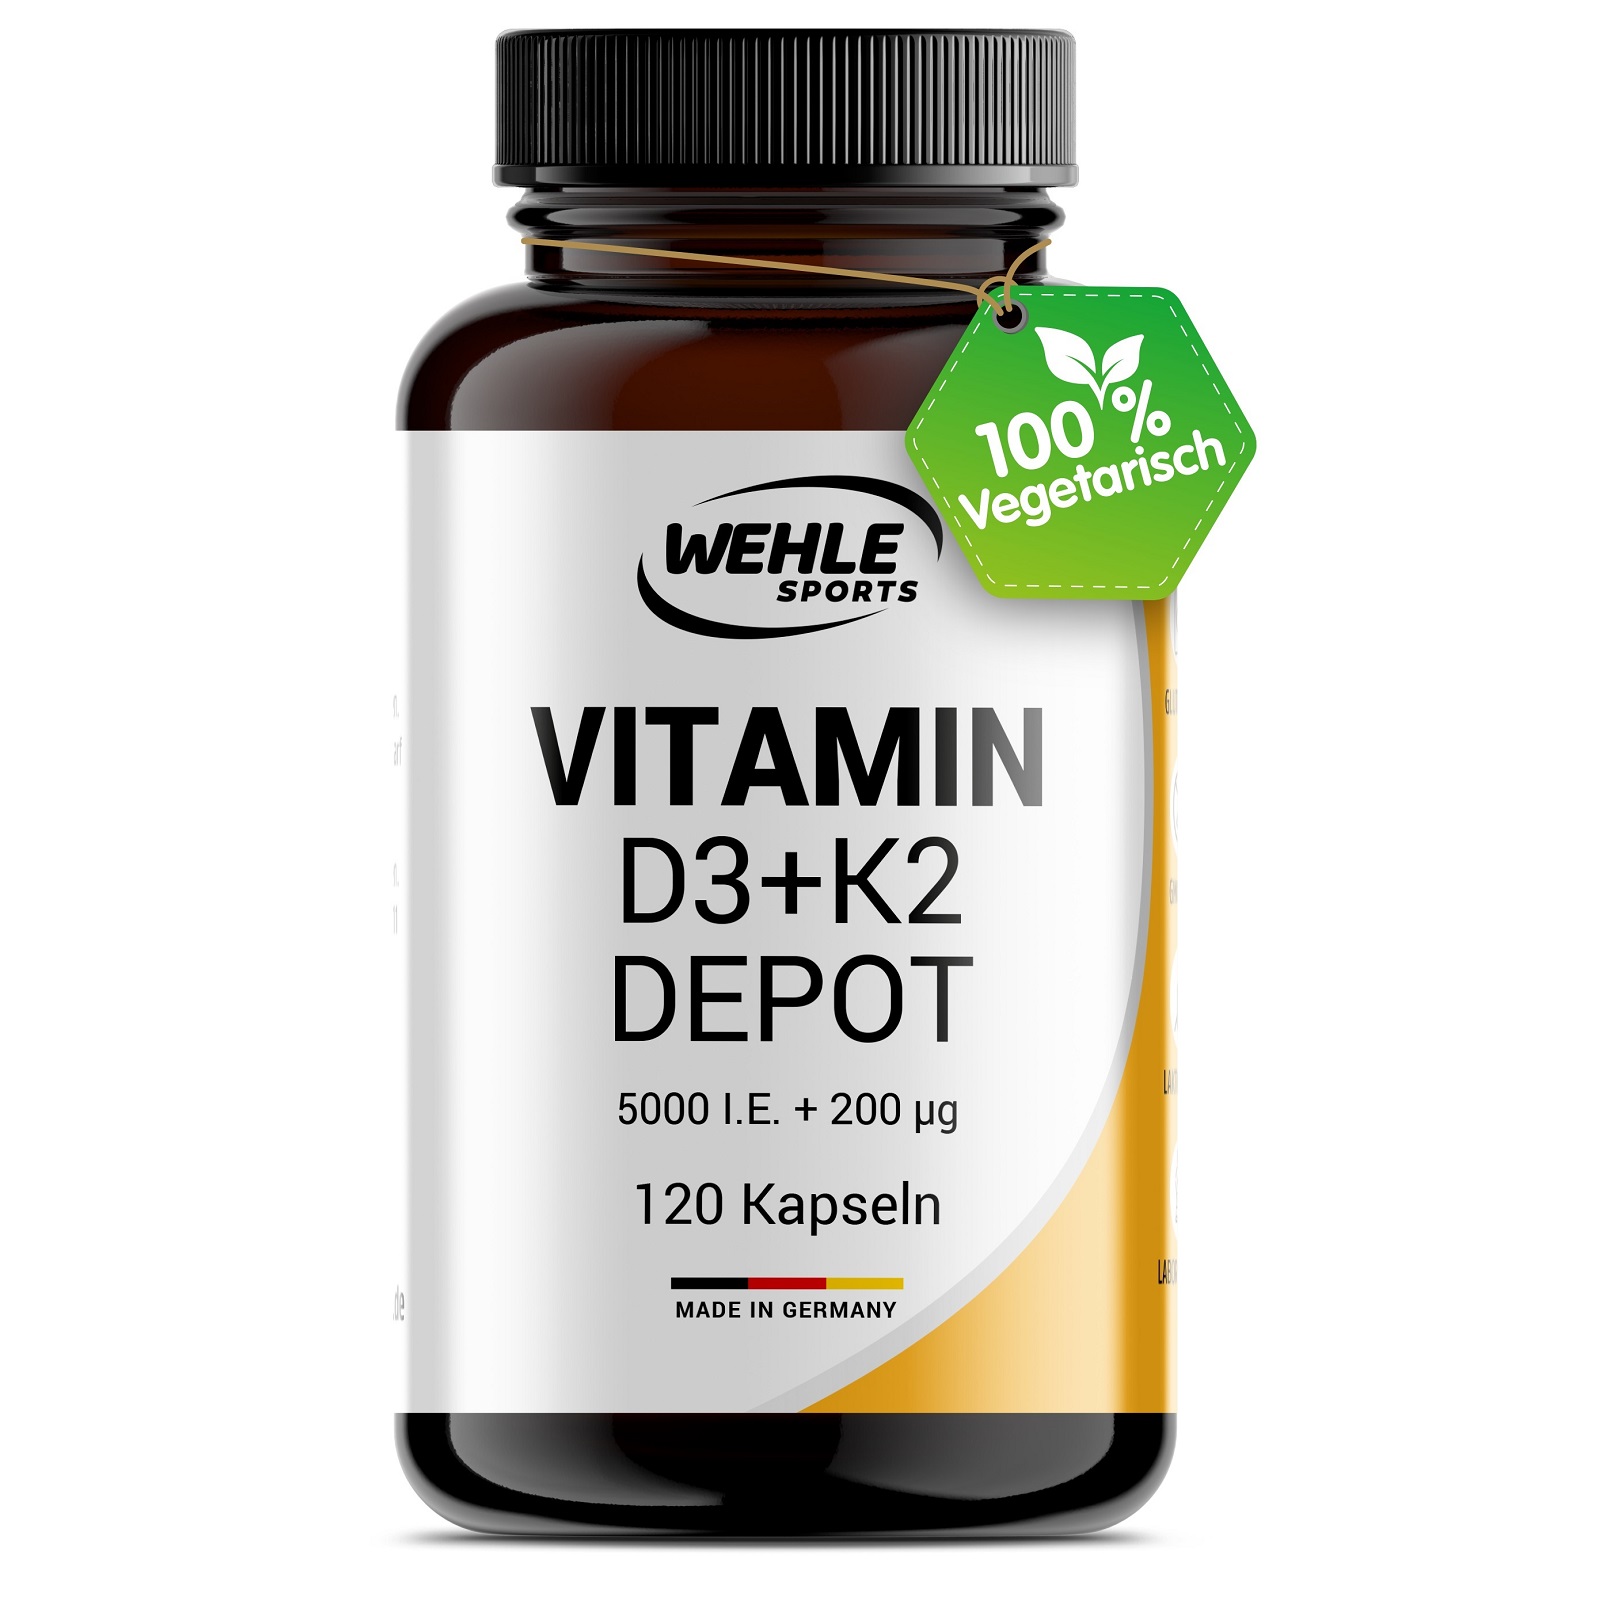 Wehle Sports Vitamin D3 + K2 | 120 Kapseln | 5000 IE Vitamin D3 und 200mcg K2 pro Kapsel